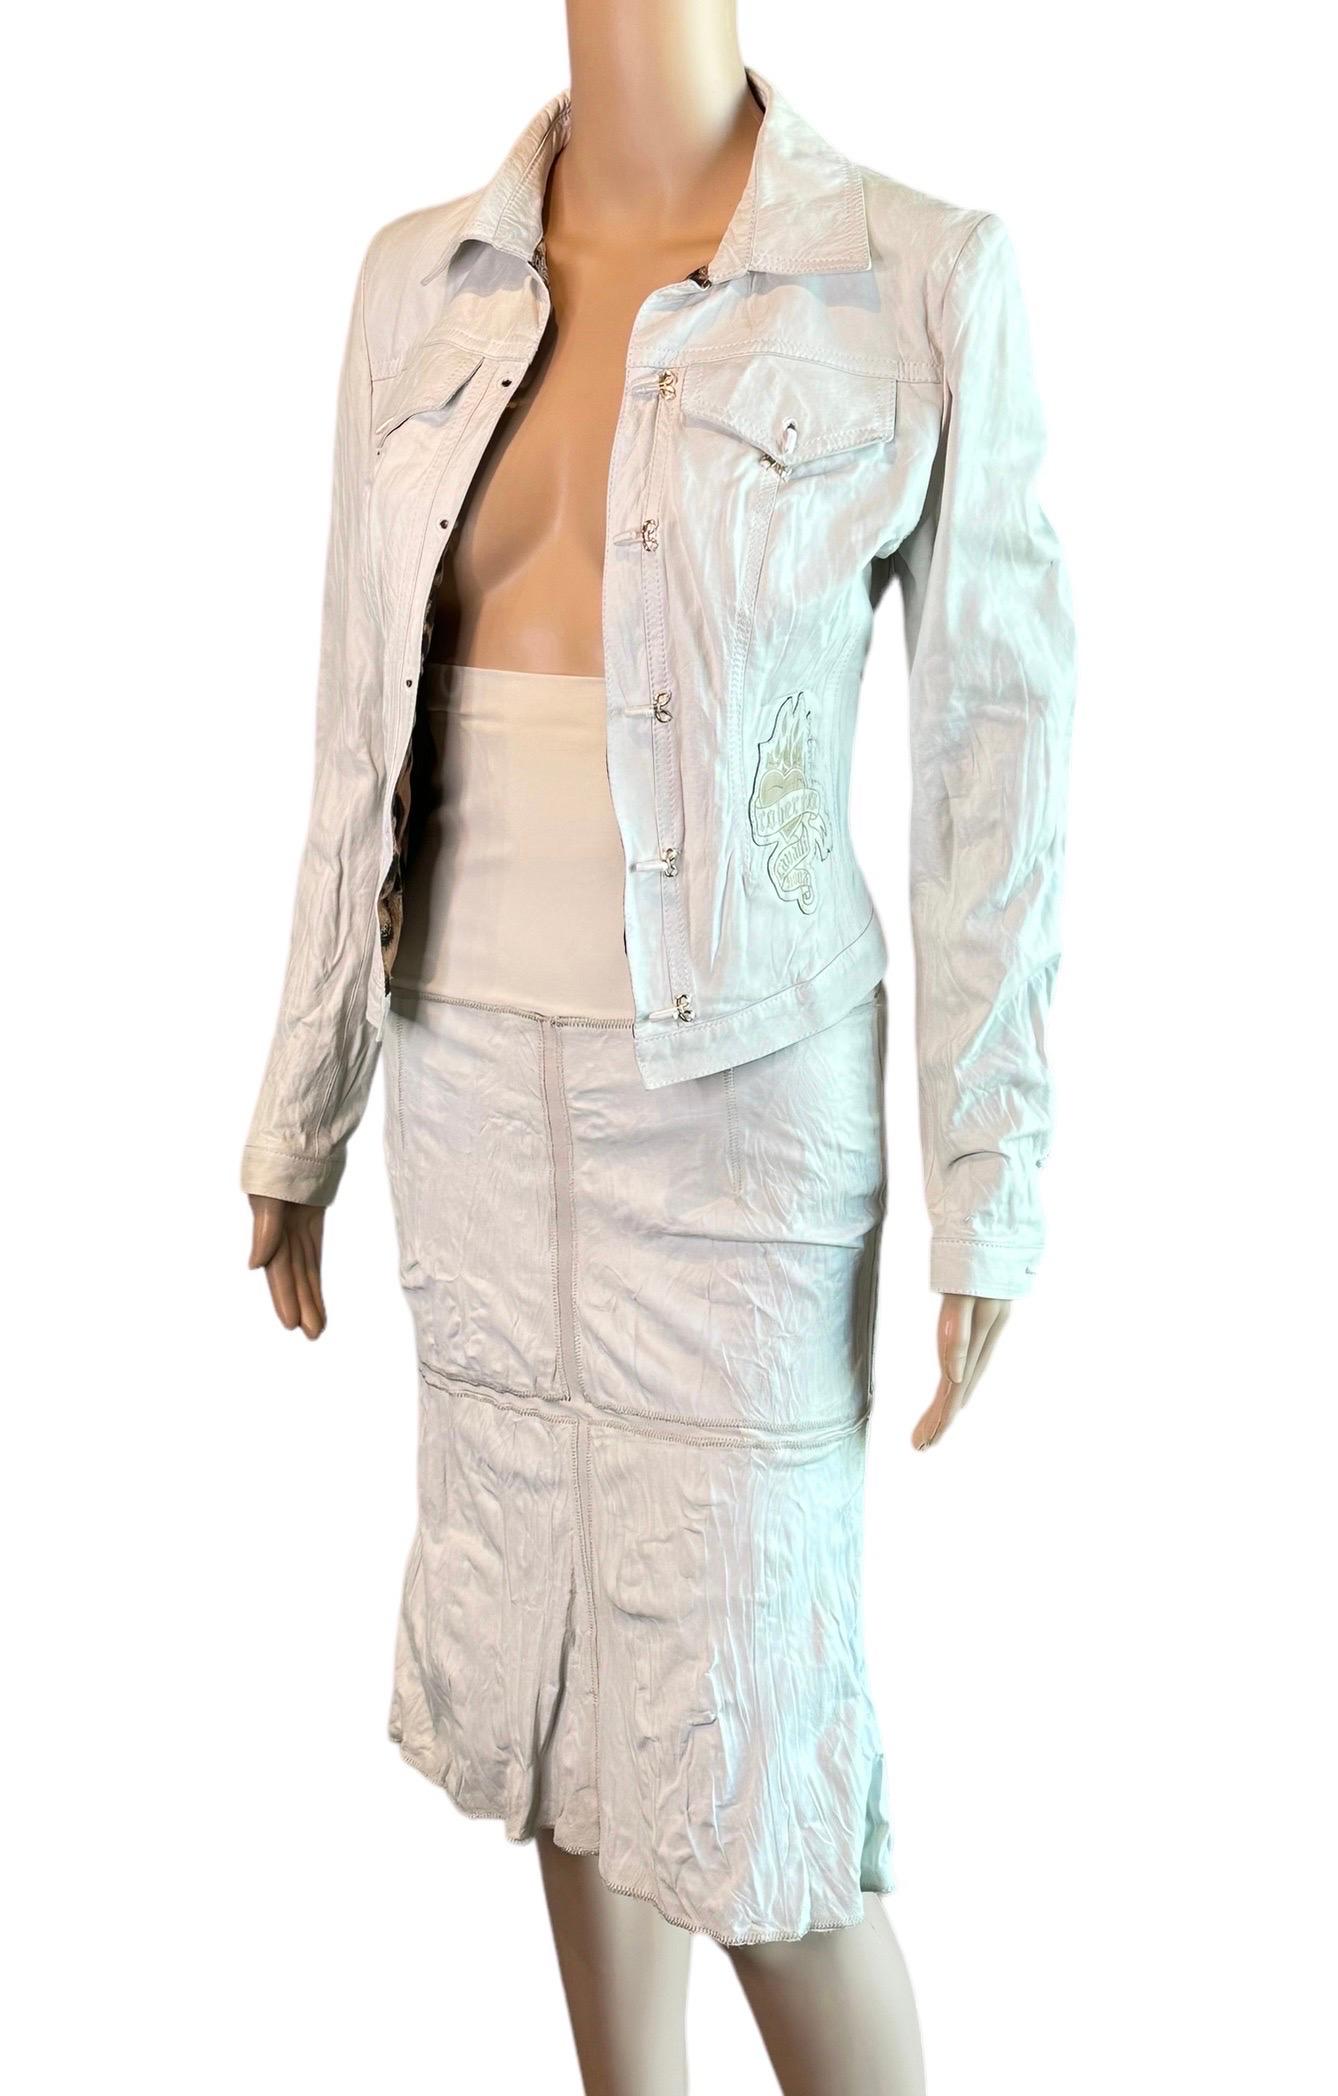 Roberto Cavalli S/S 2003 Unworn Leather Jacket Coat & Skirt 2 Piece Set Ensemble For Sale 5